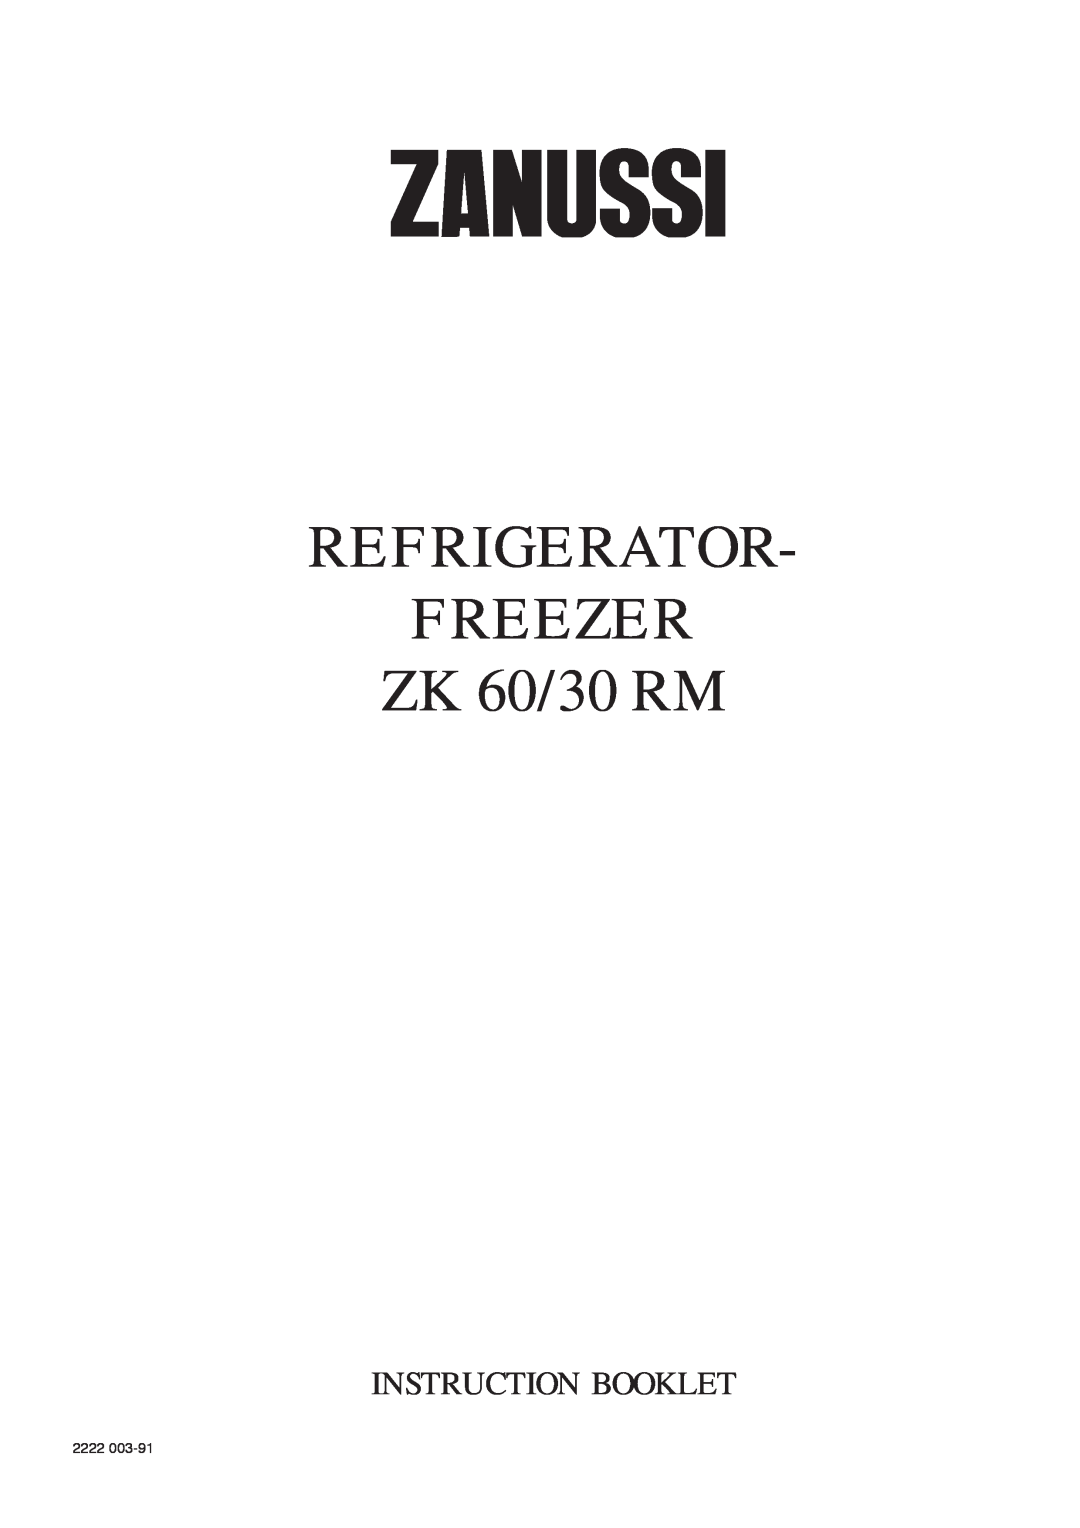 Zanussi manual REFRIGERATOR FREEZER ZK 60/30 RM, Instruction Booklet, 2222 